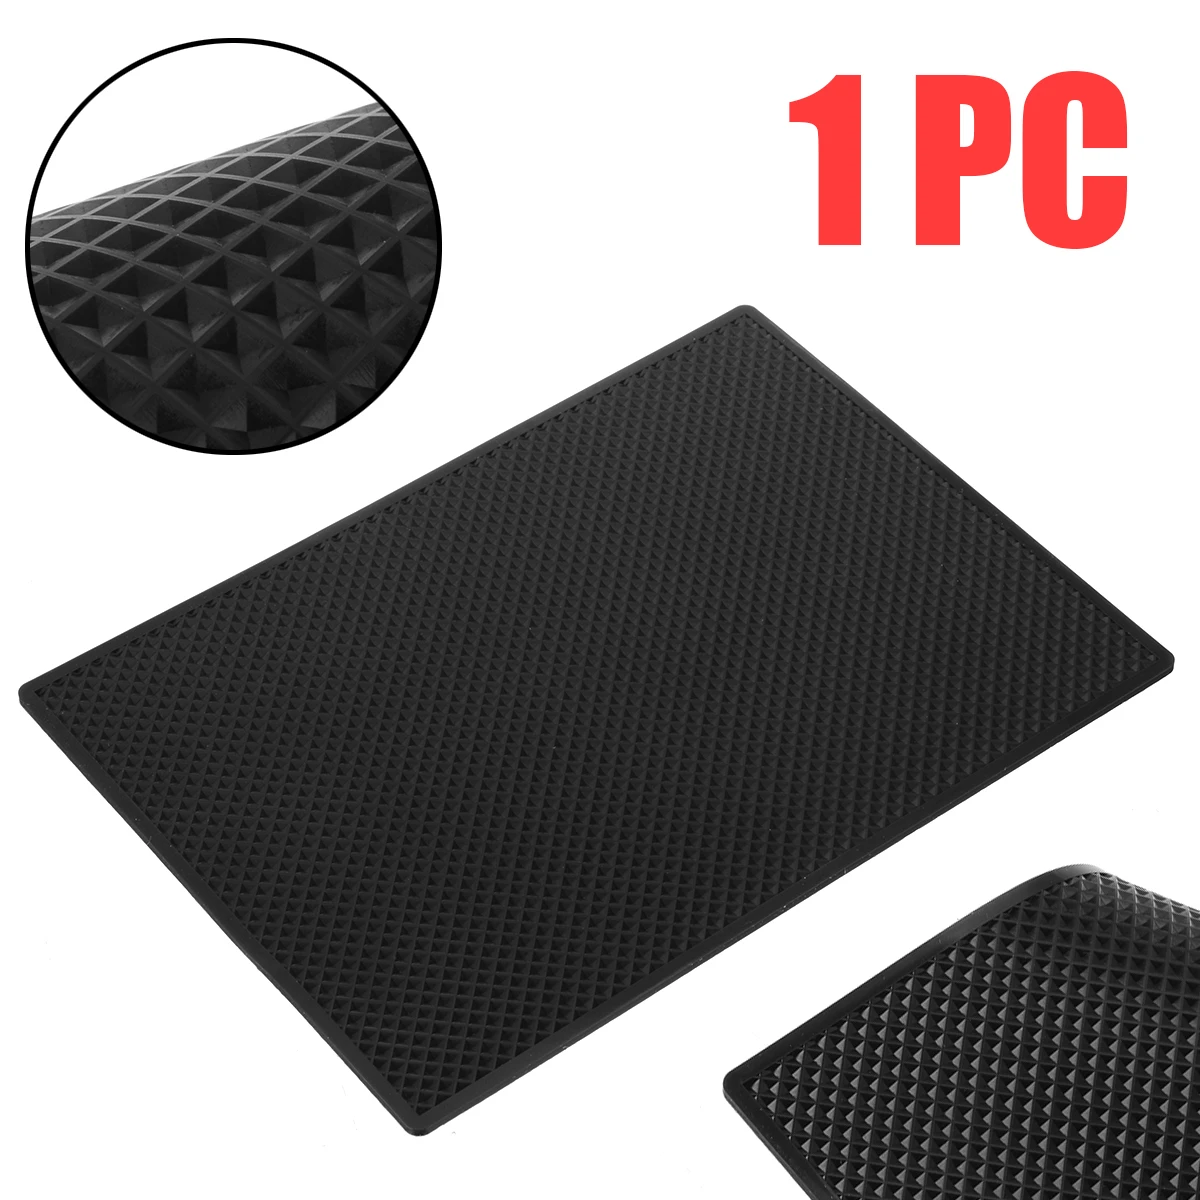 

1pc PVC Anti-Slip Cell Phone Mat Holder Black 18cm x 13cm for Home Table Desk Car Auto Dashboard Non-slip Sticky Pad